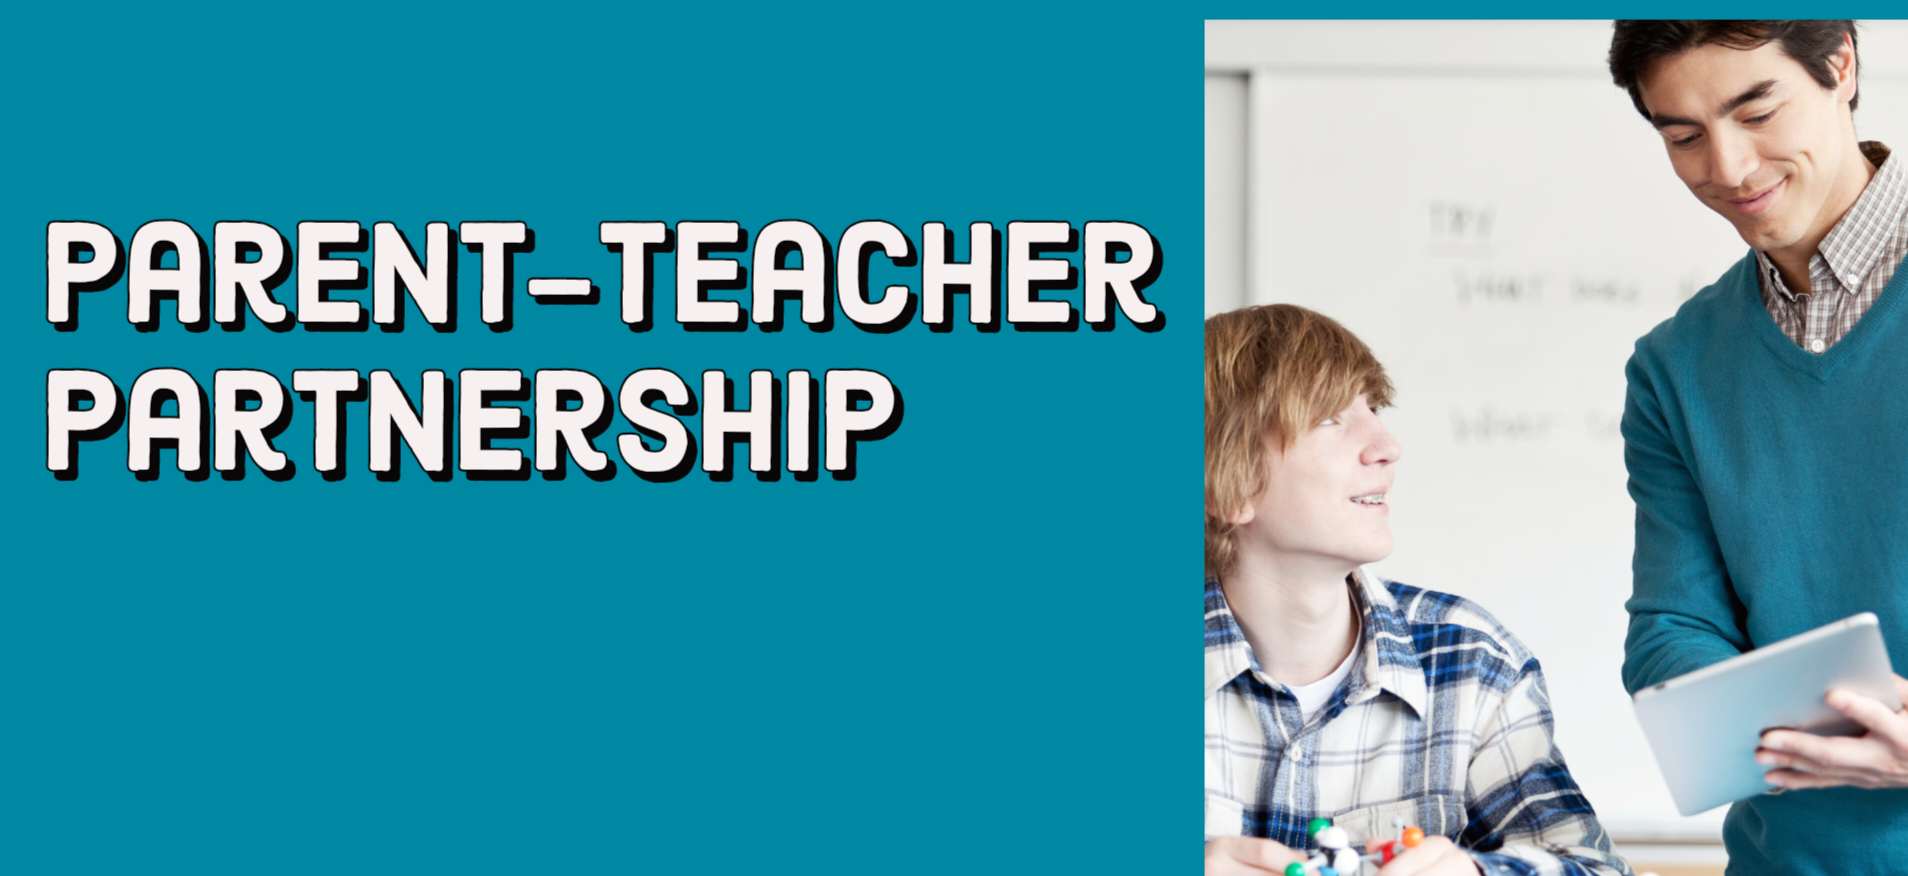 Parent-Teacher Partnership: Nurturing Student Success Together